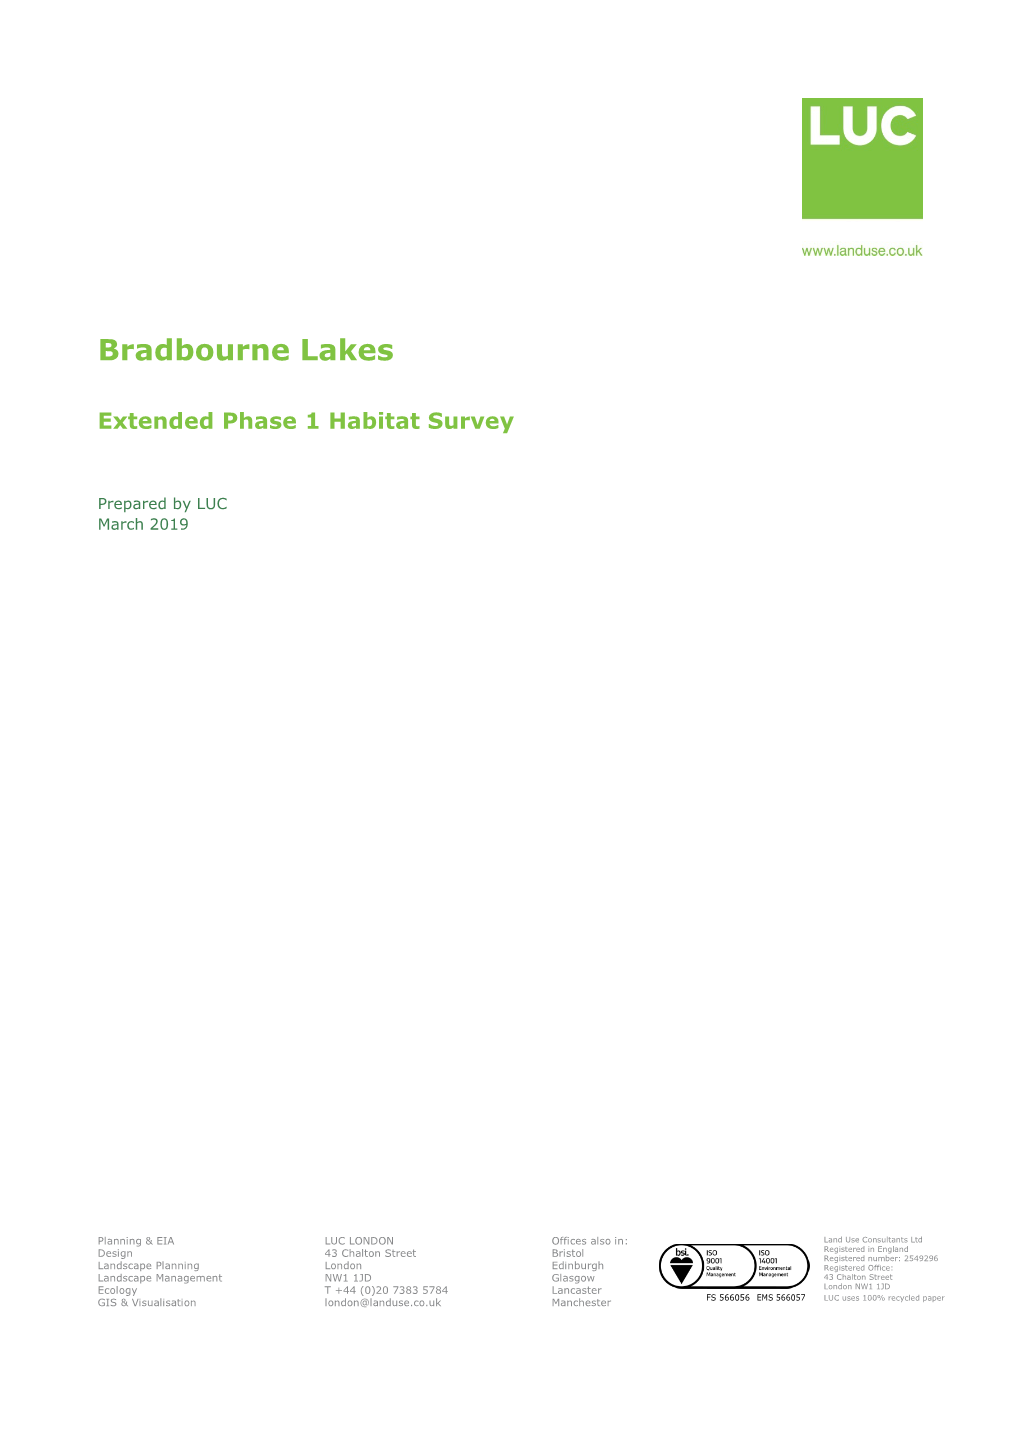 Bradbourne Lakes, Extended Phase 1 Habitat Survey 2 March 2019 2 Methods